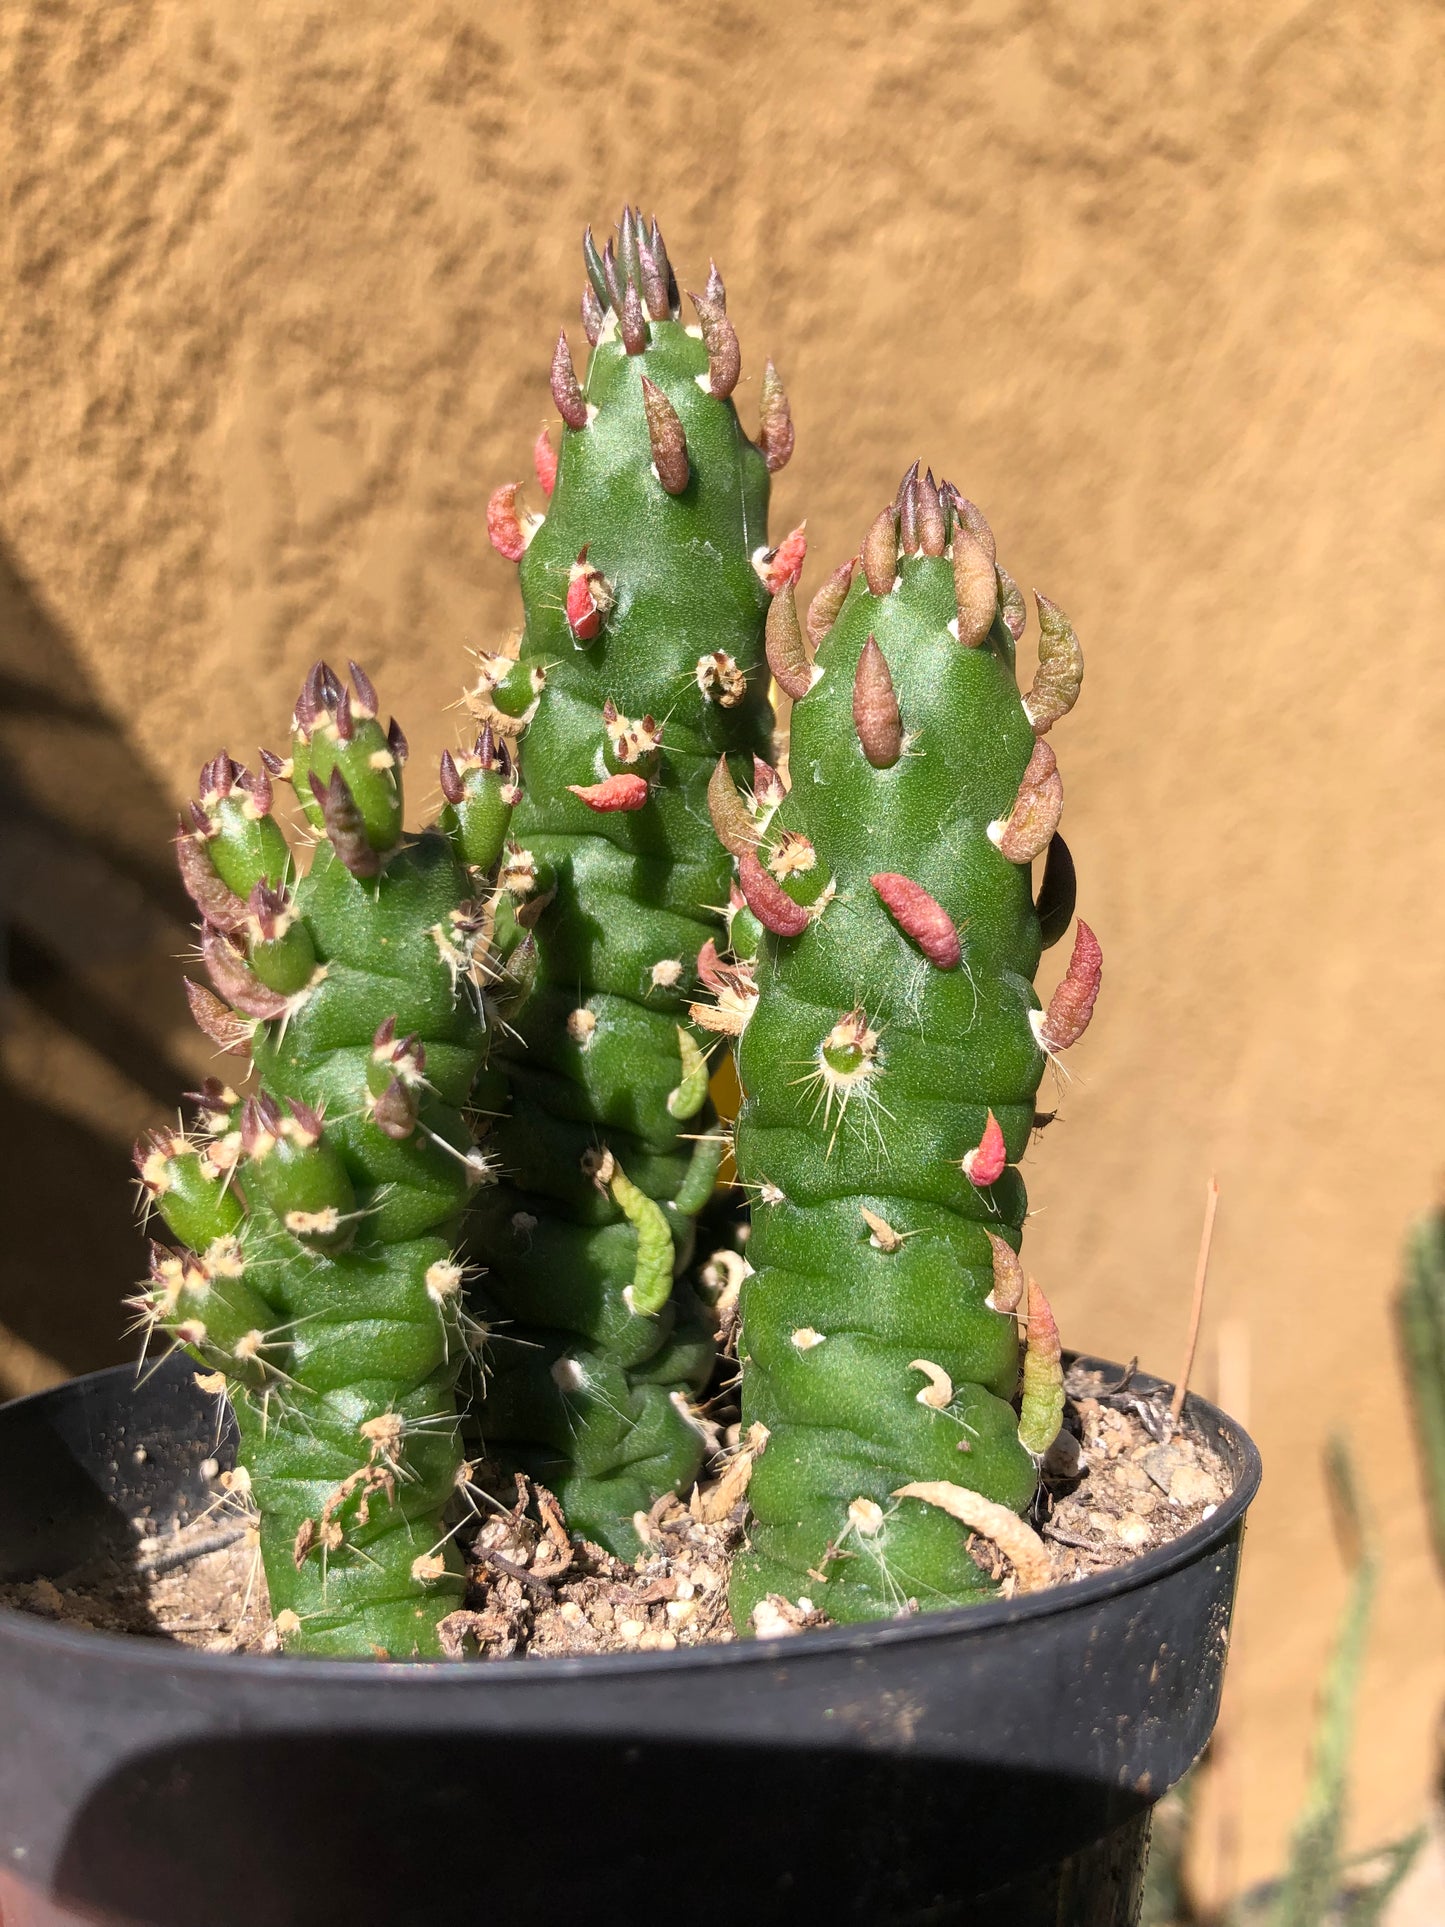 Austrocylindropuntia Cactus Gumbi Mini Eve's Needle 3.5"Tall #7Y